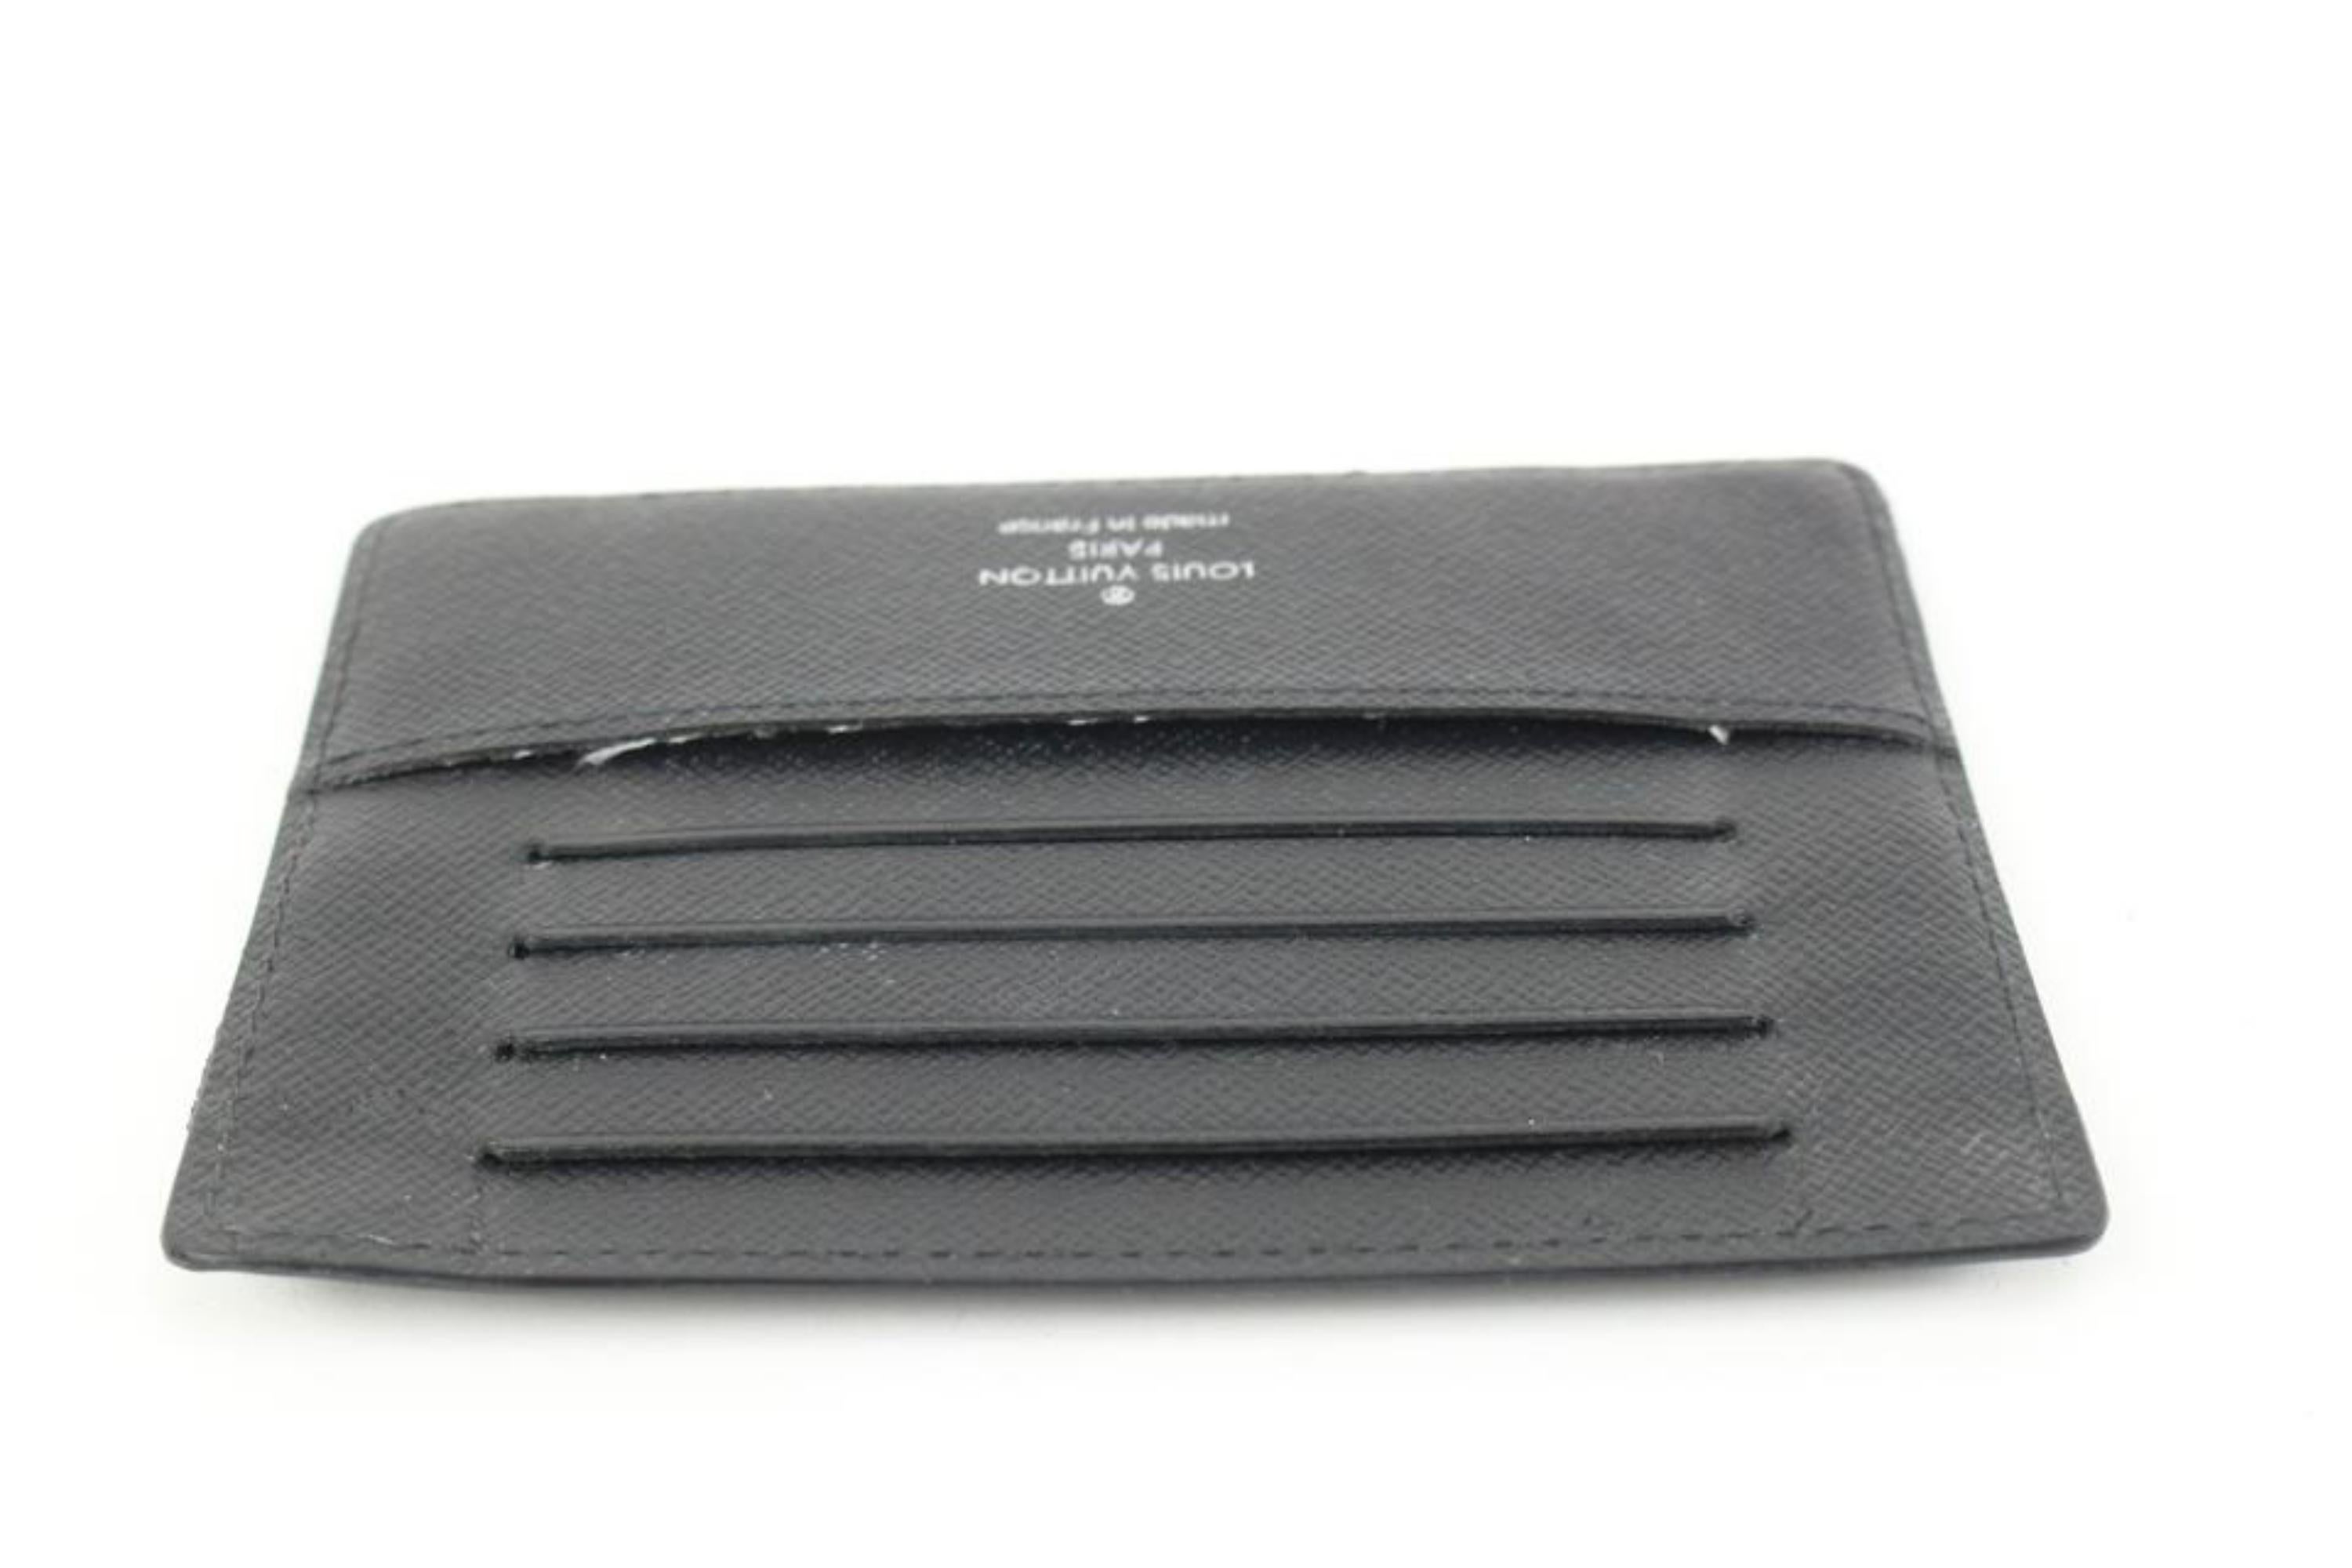 Louis Vuitton Damier Graphite Large Card Holder Wallet Case Insert 25lk413s For Sale 1